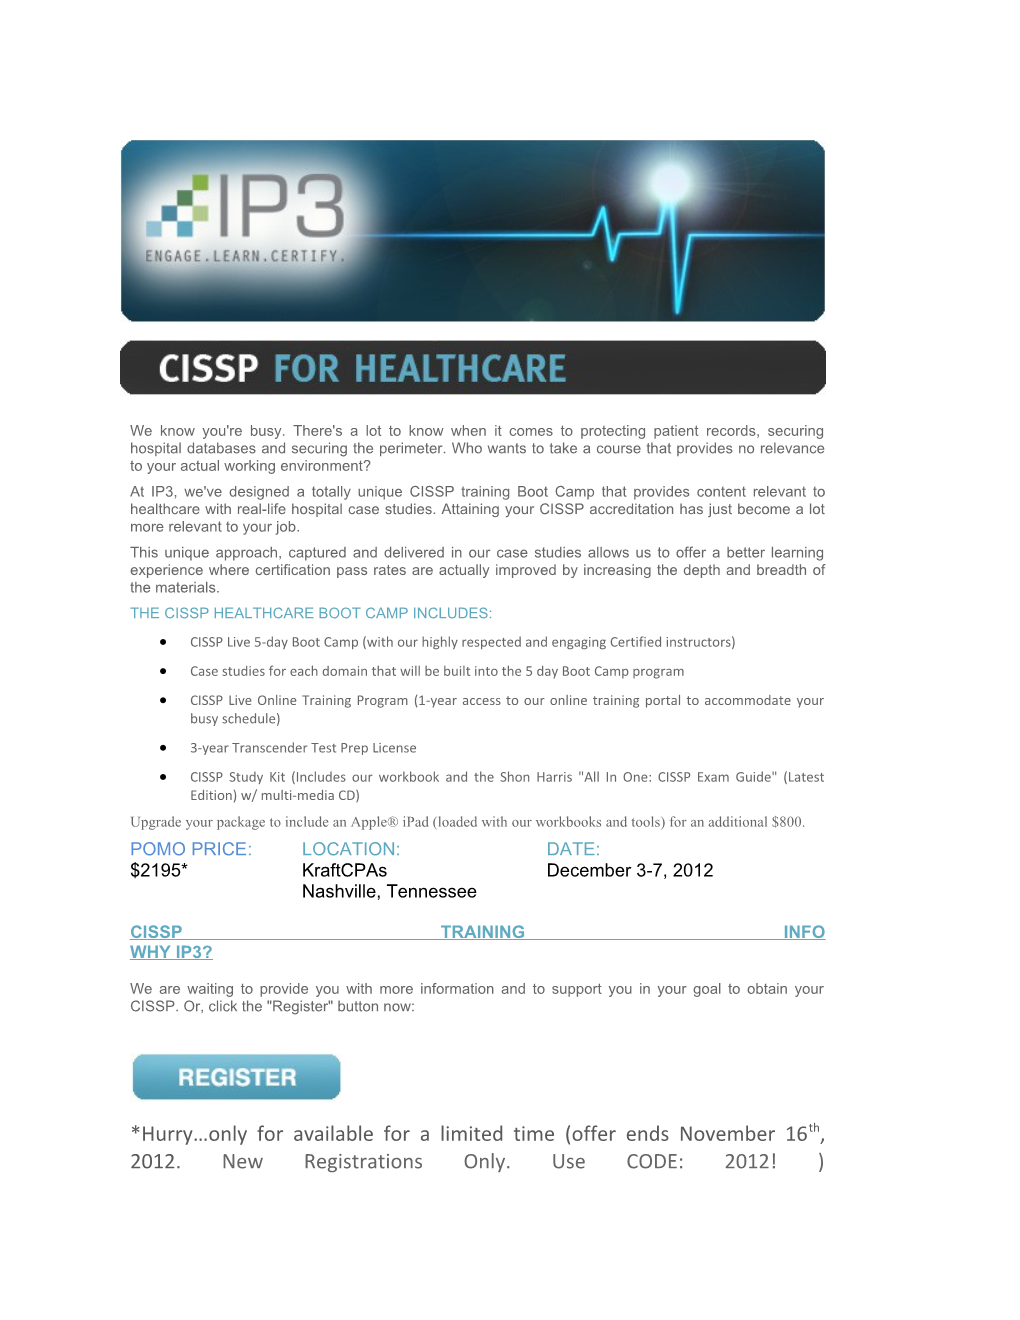 Cissp Training Info Why Ip3?